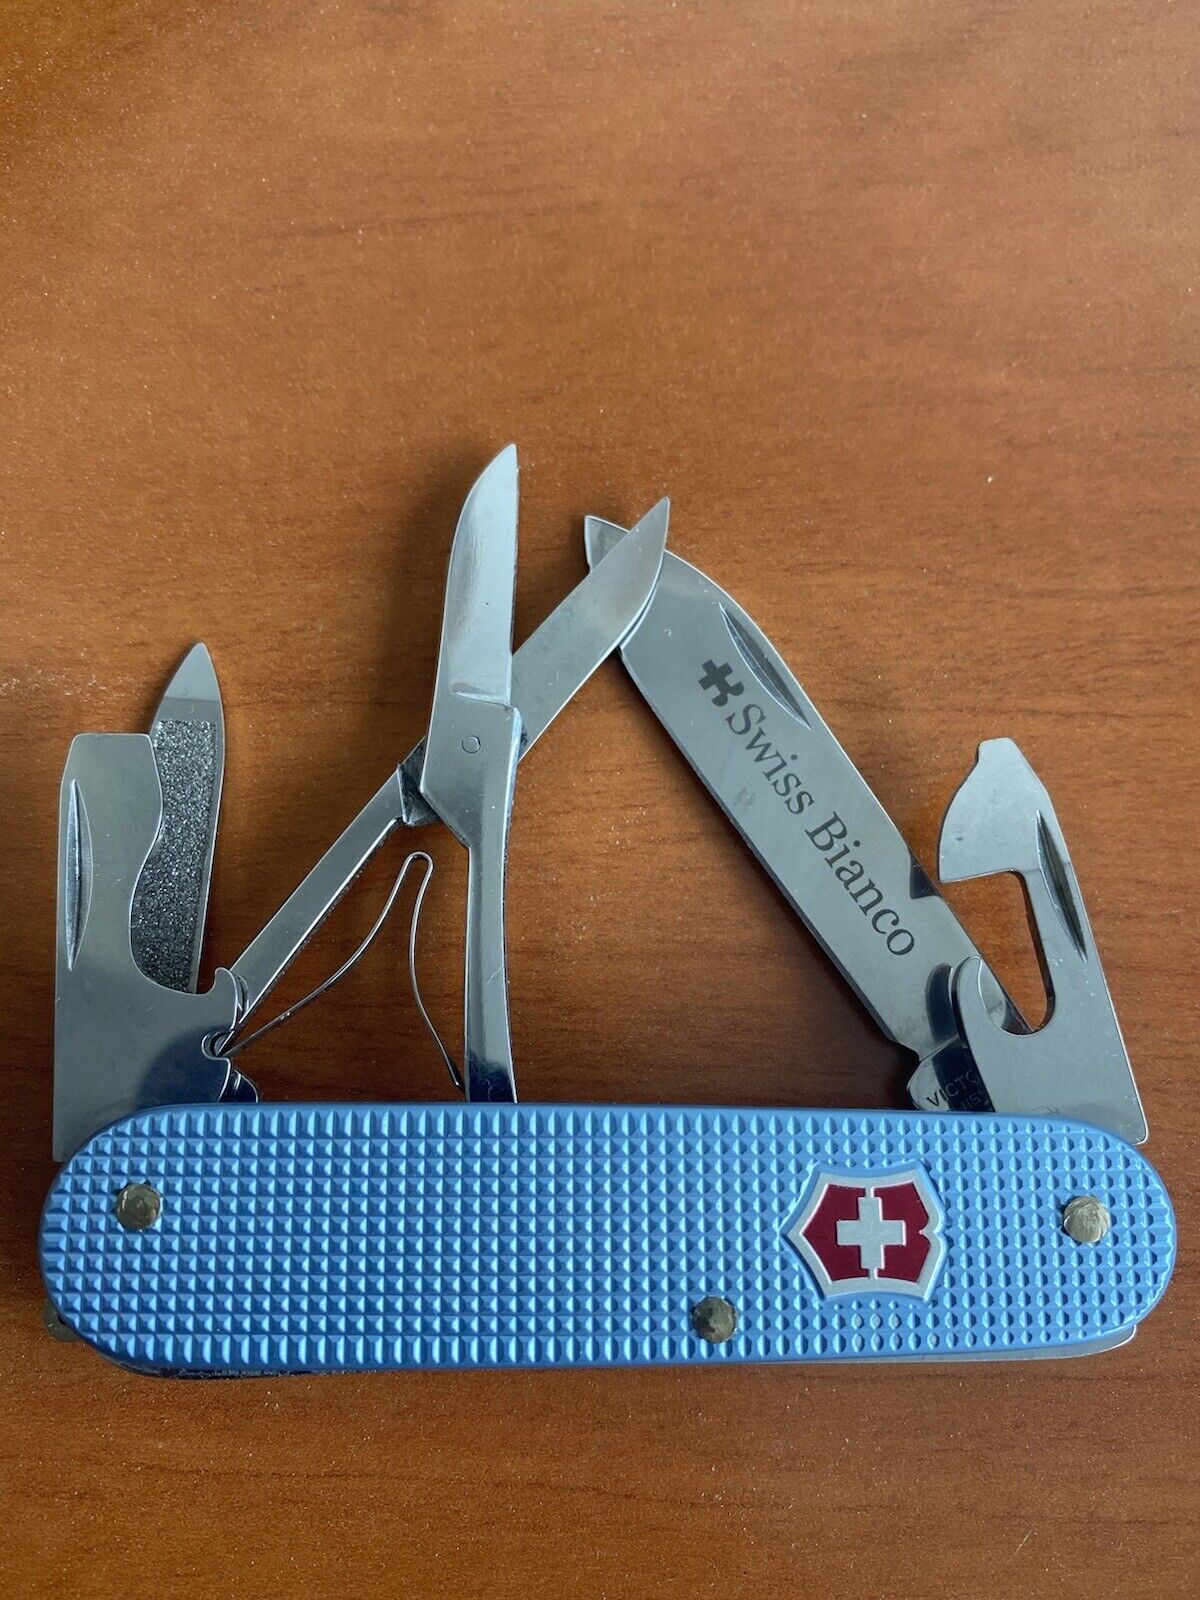 Victorinox Sky Blue +B Cadet X Alox W/scissors Modded Swiss Army Knife.